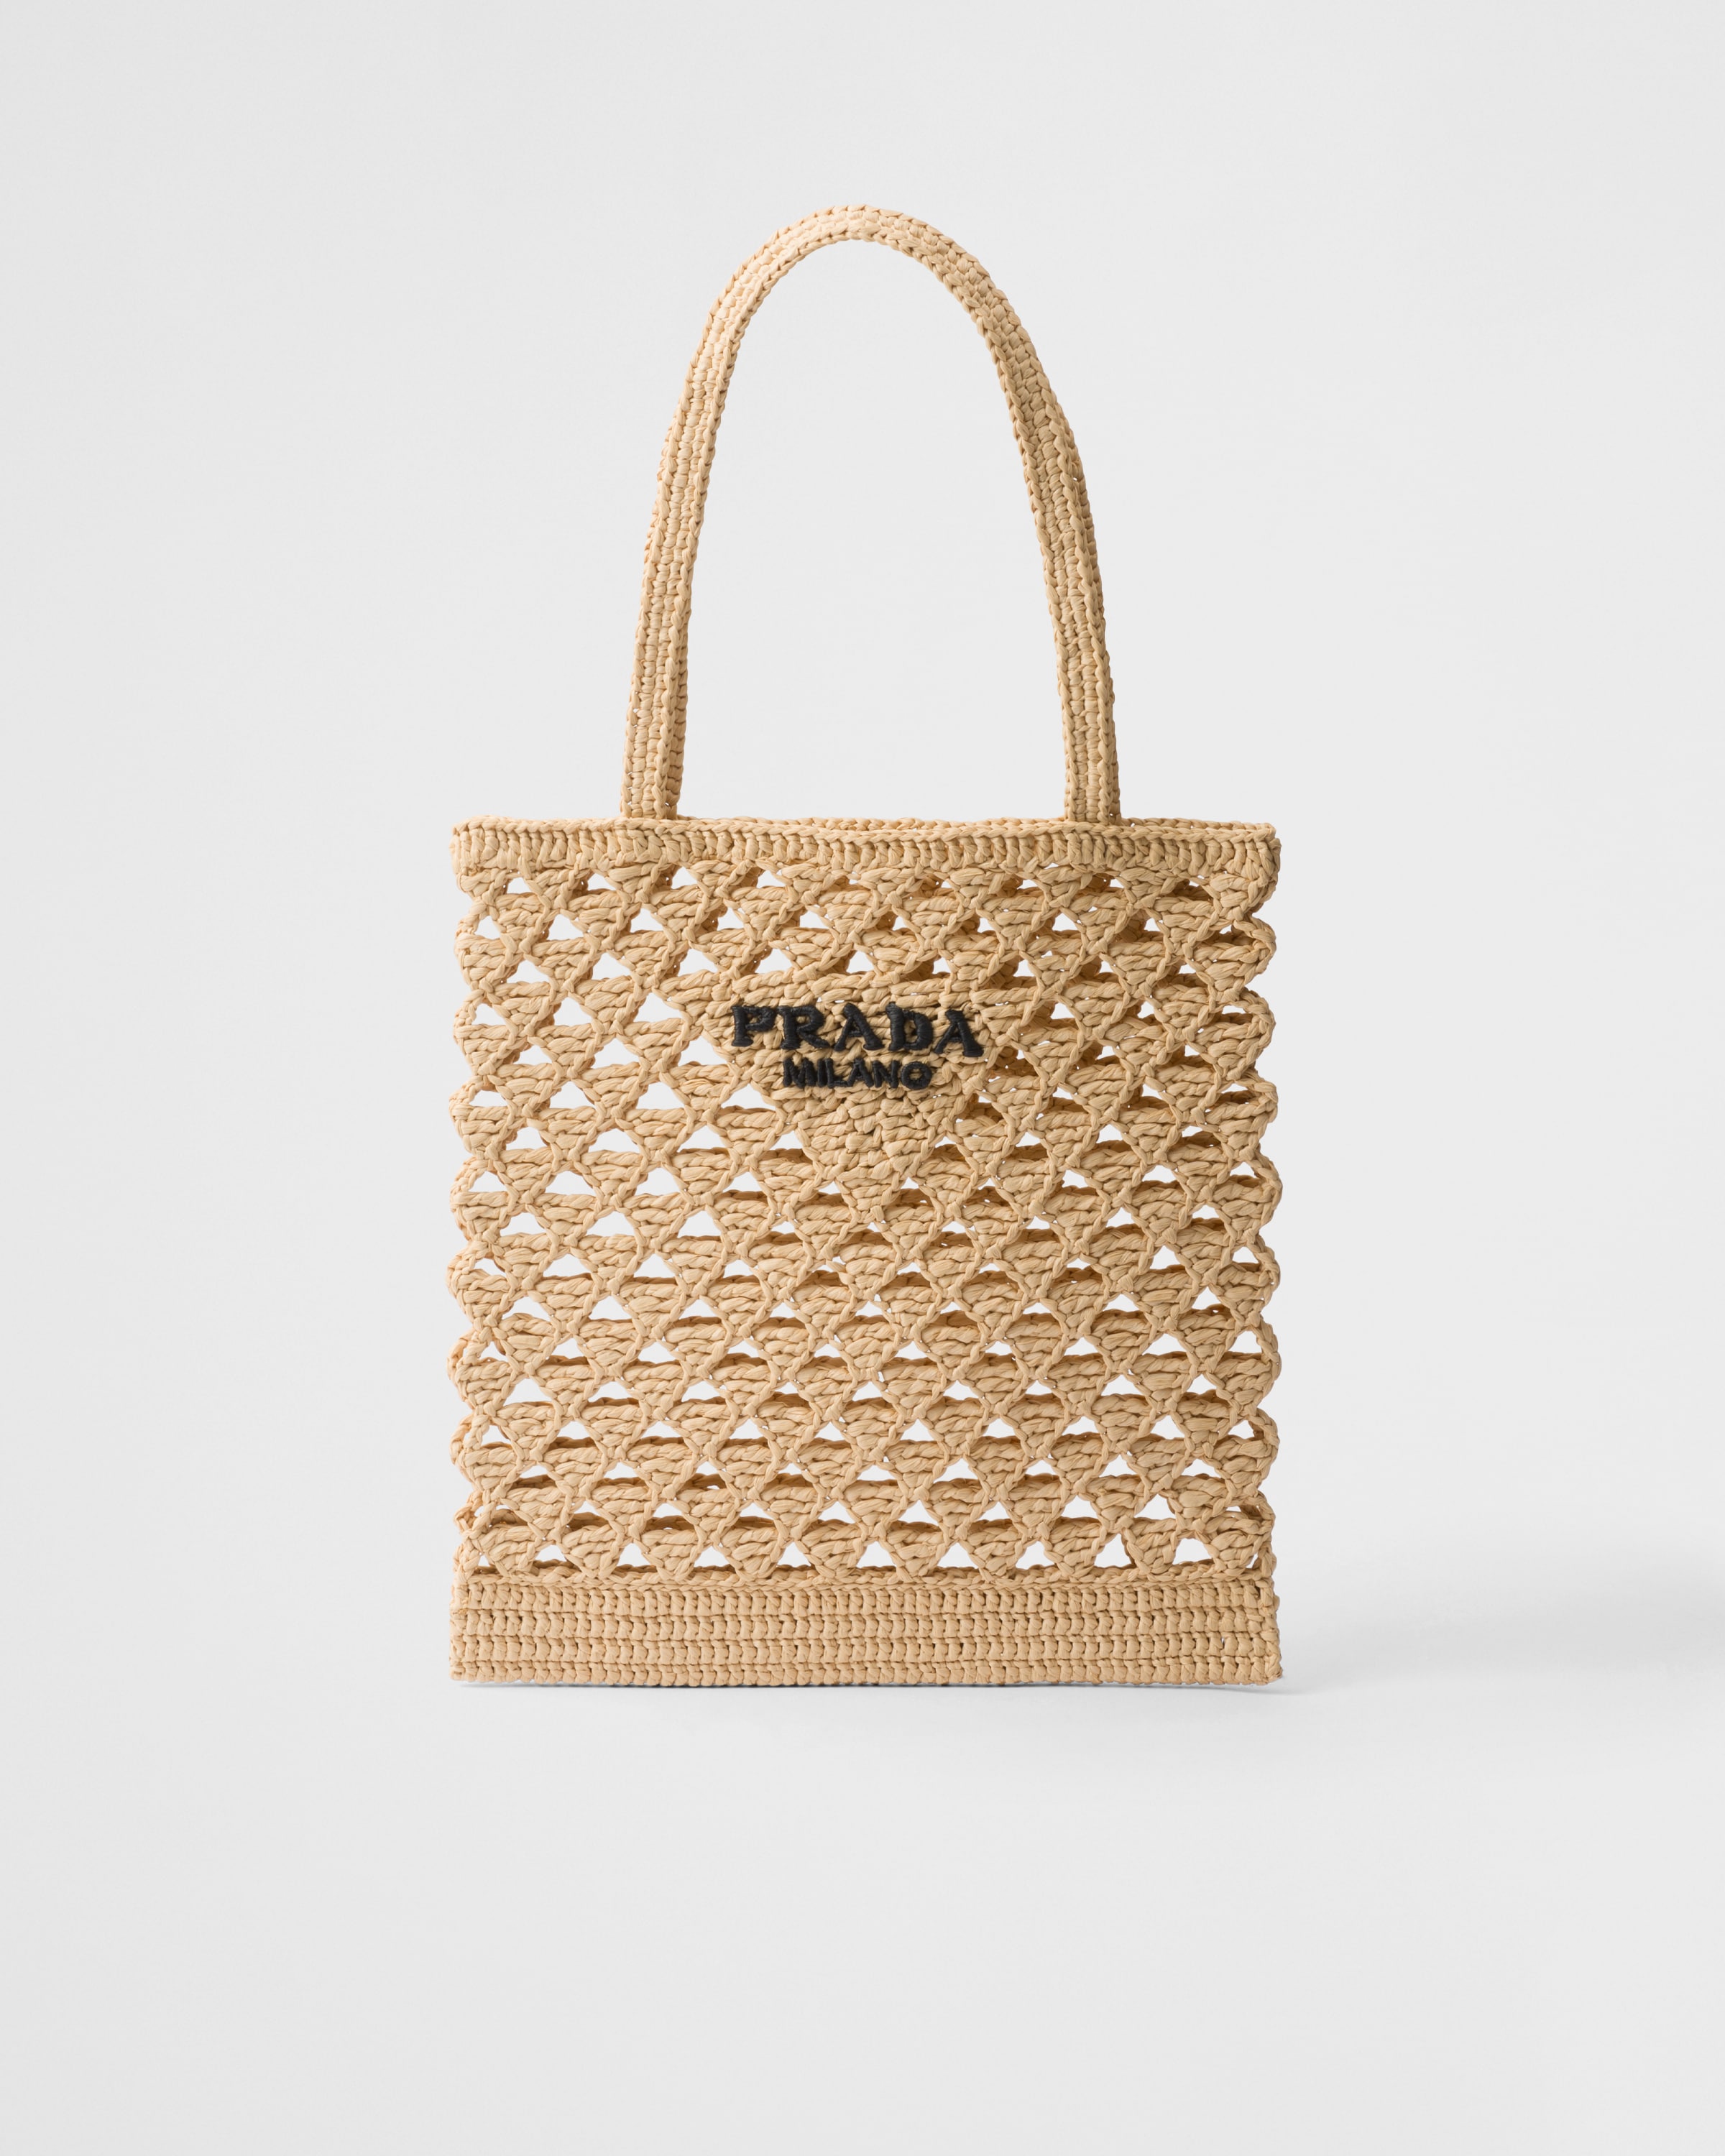 Prada, Woven Fabric Crochet Tote Bag